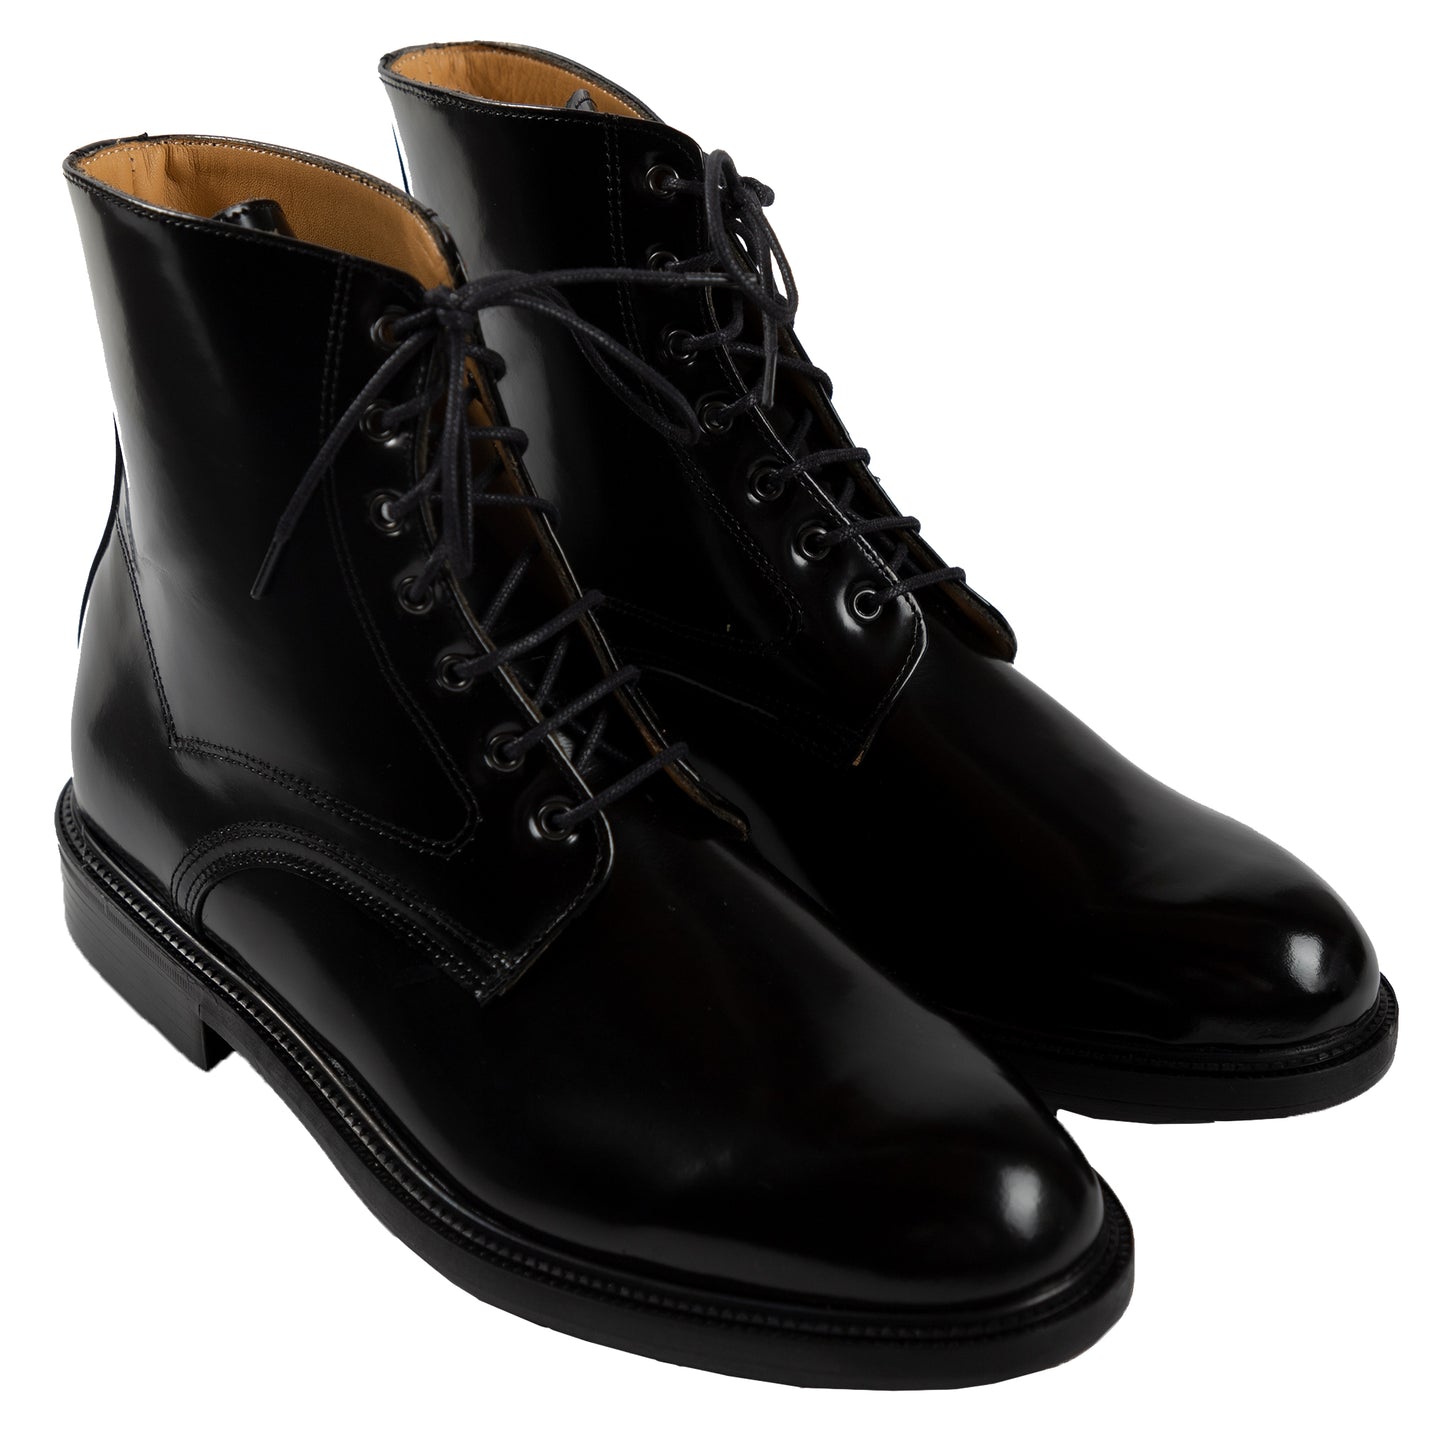 Kleman Boule Vernis Boot Footwear Shoe Workwear Lace Up Black